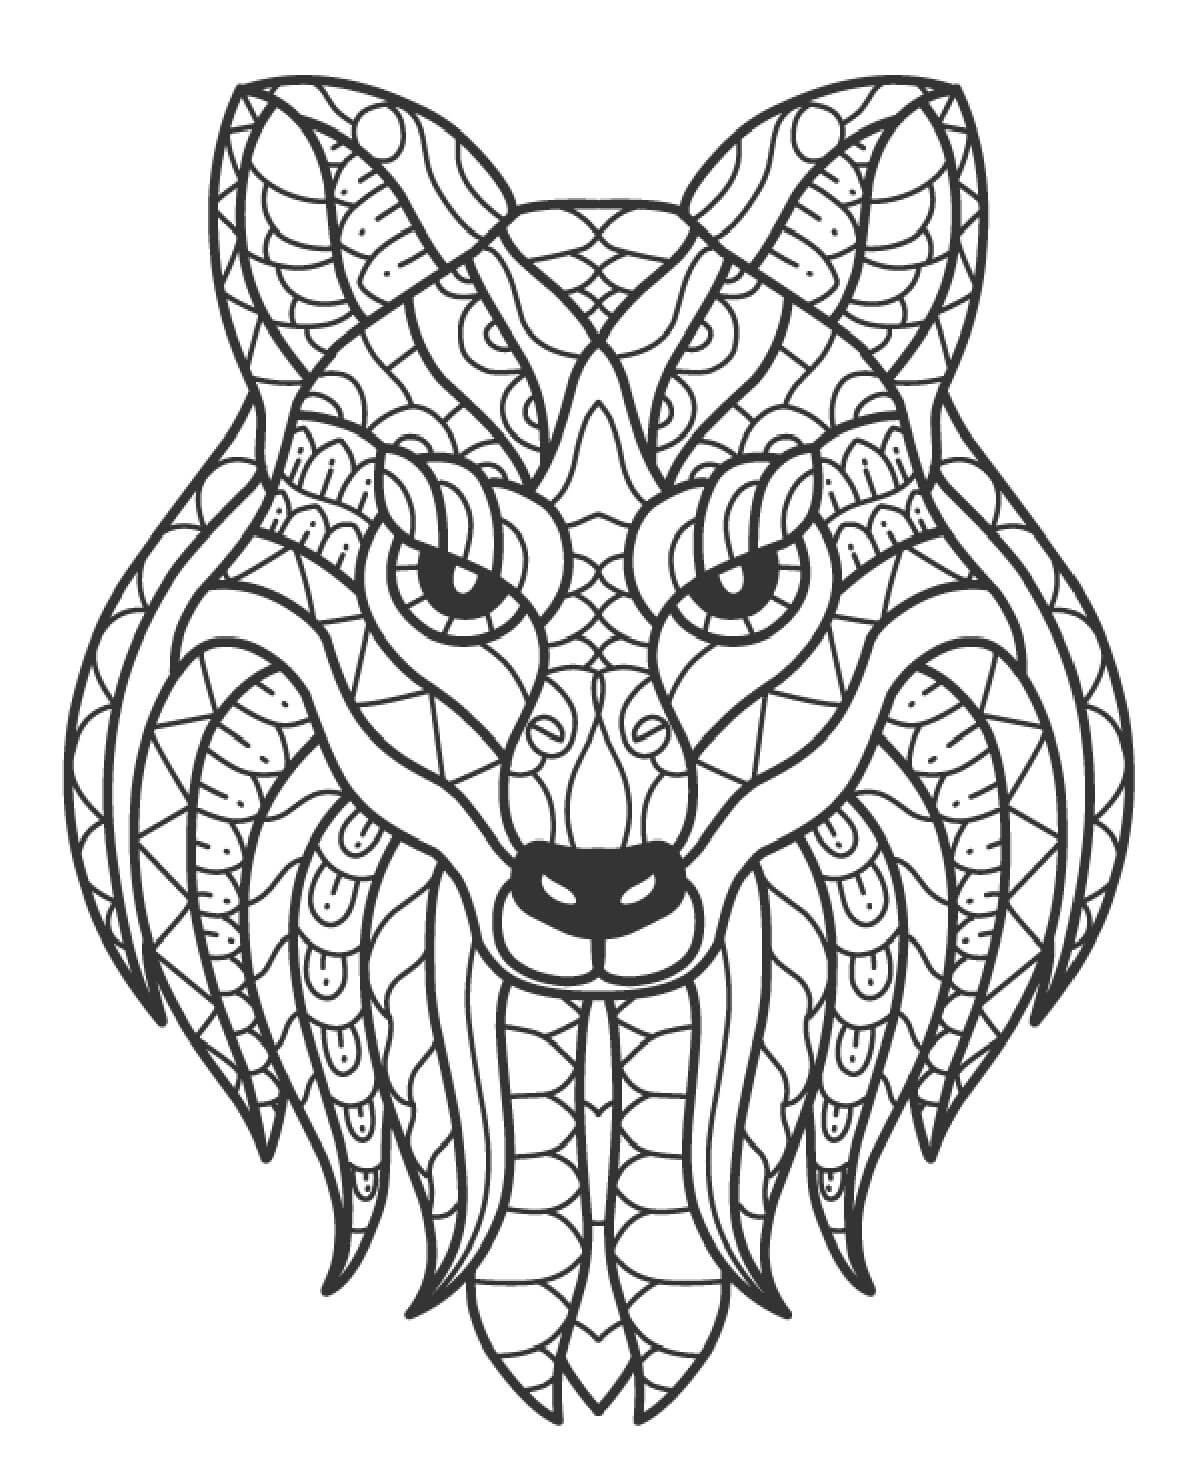 Mandala Wolf Coloring Page - Sheet 6 Mandalas